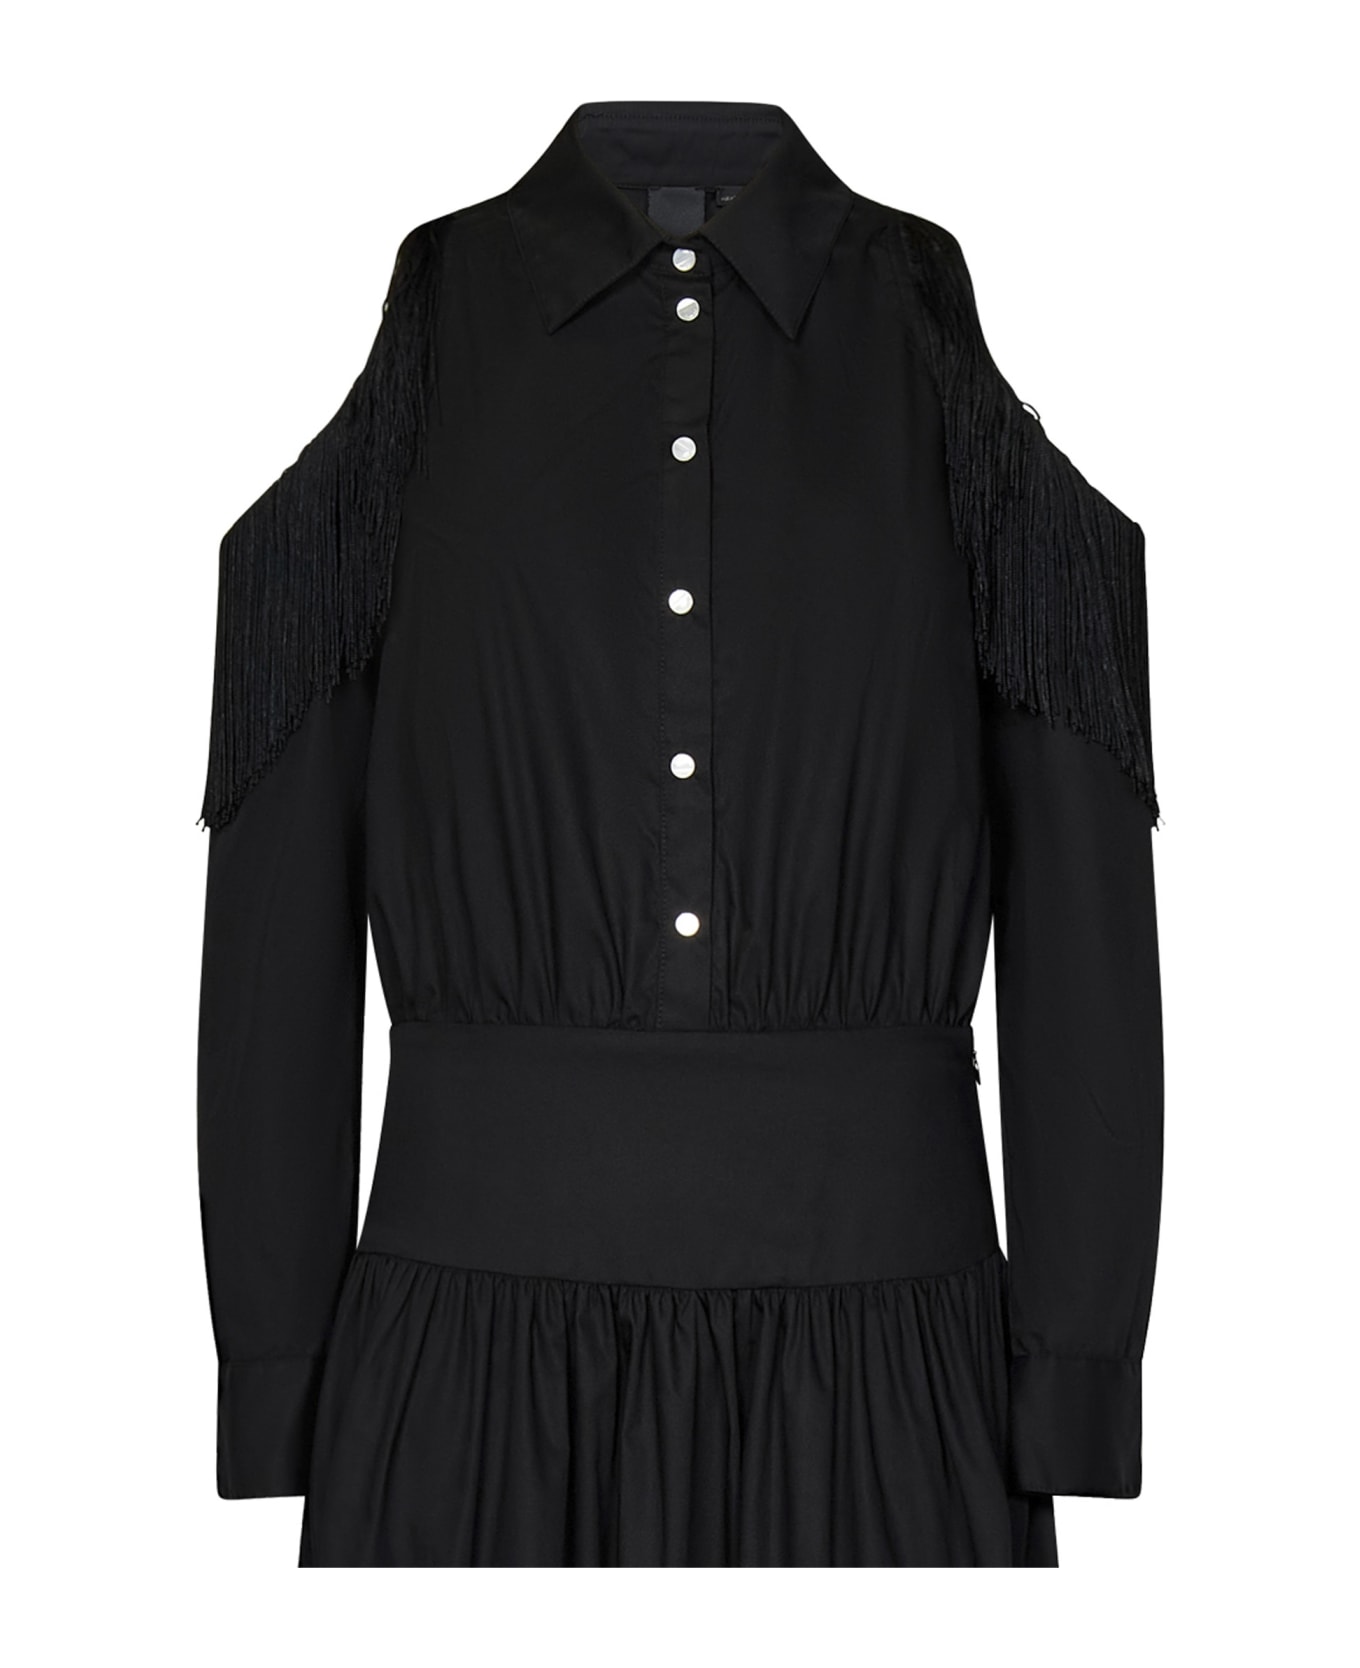 Pinko Hazzard Dress - Black